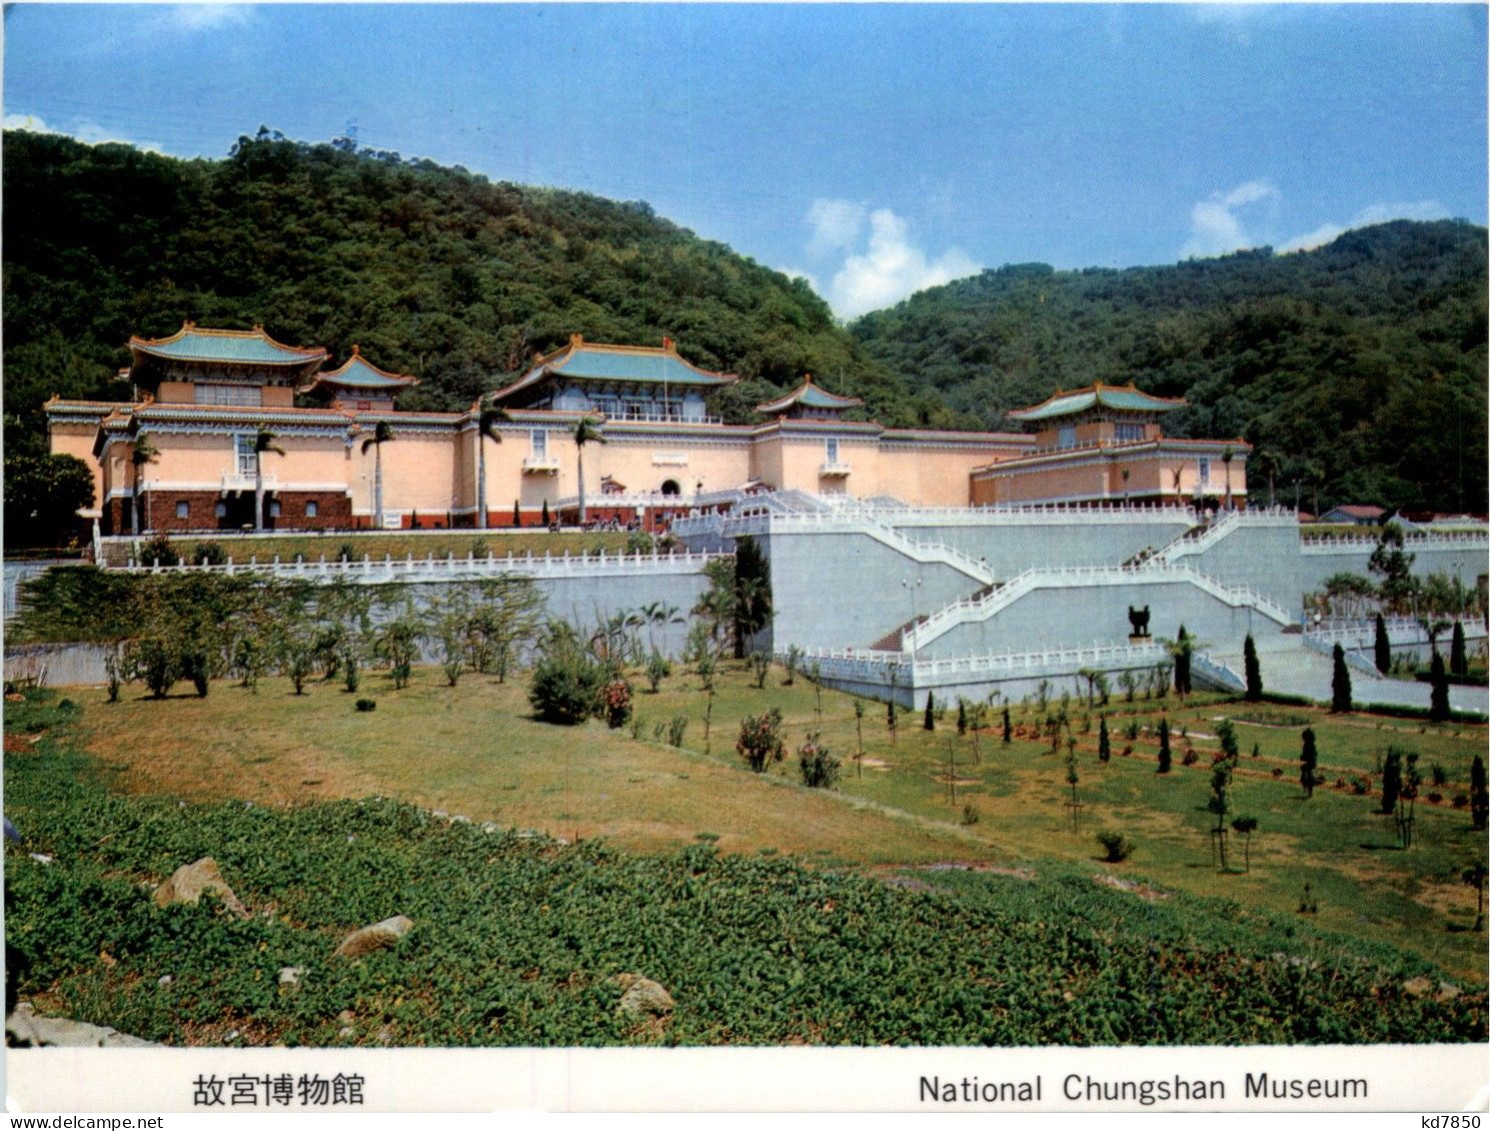 National Chungshan Museum - China